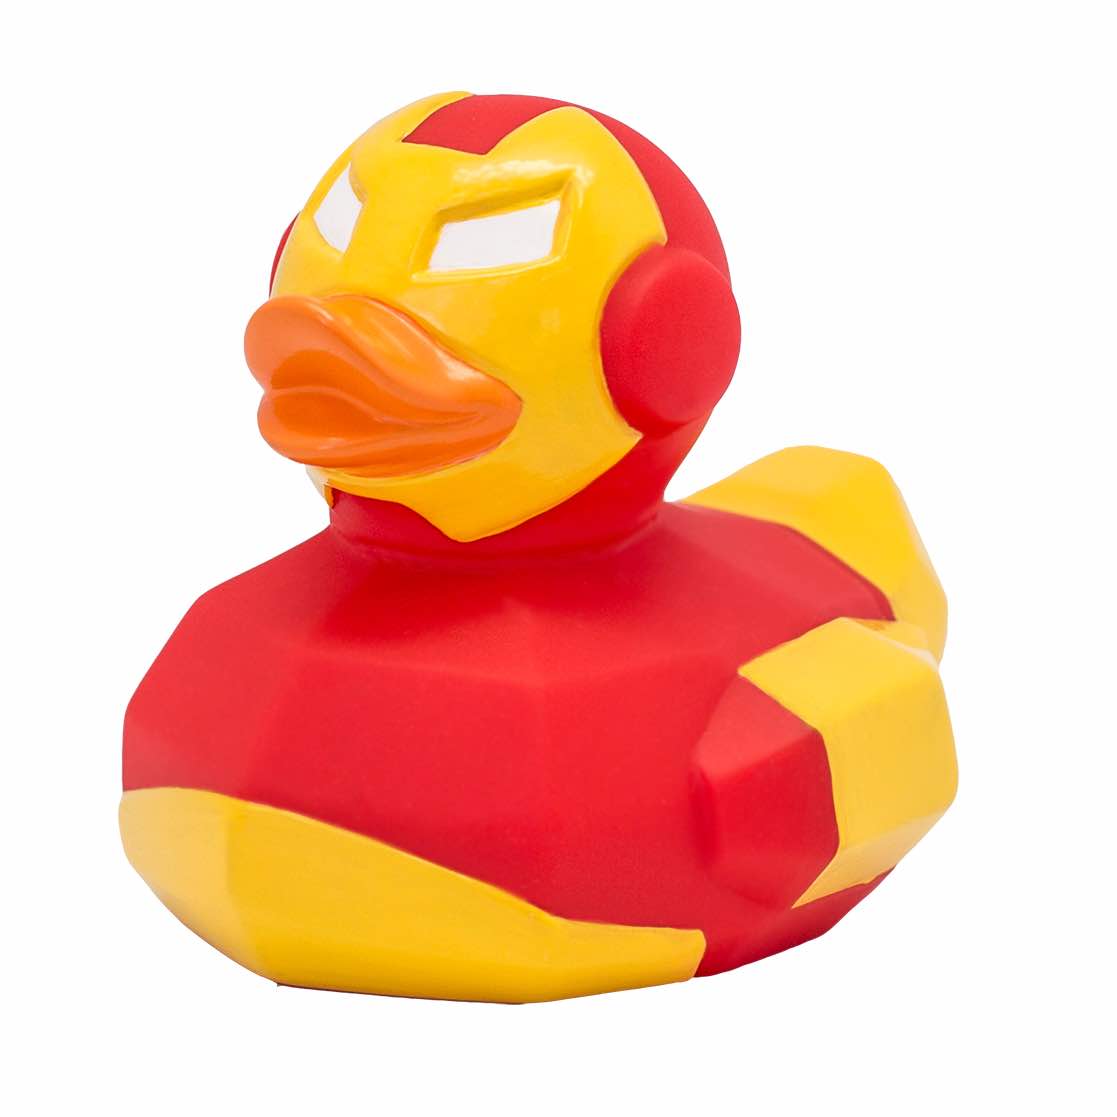 Details about   Rubber Duck Iron Man Rubber Duckie Rubber Ducky Bathduck 